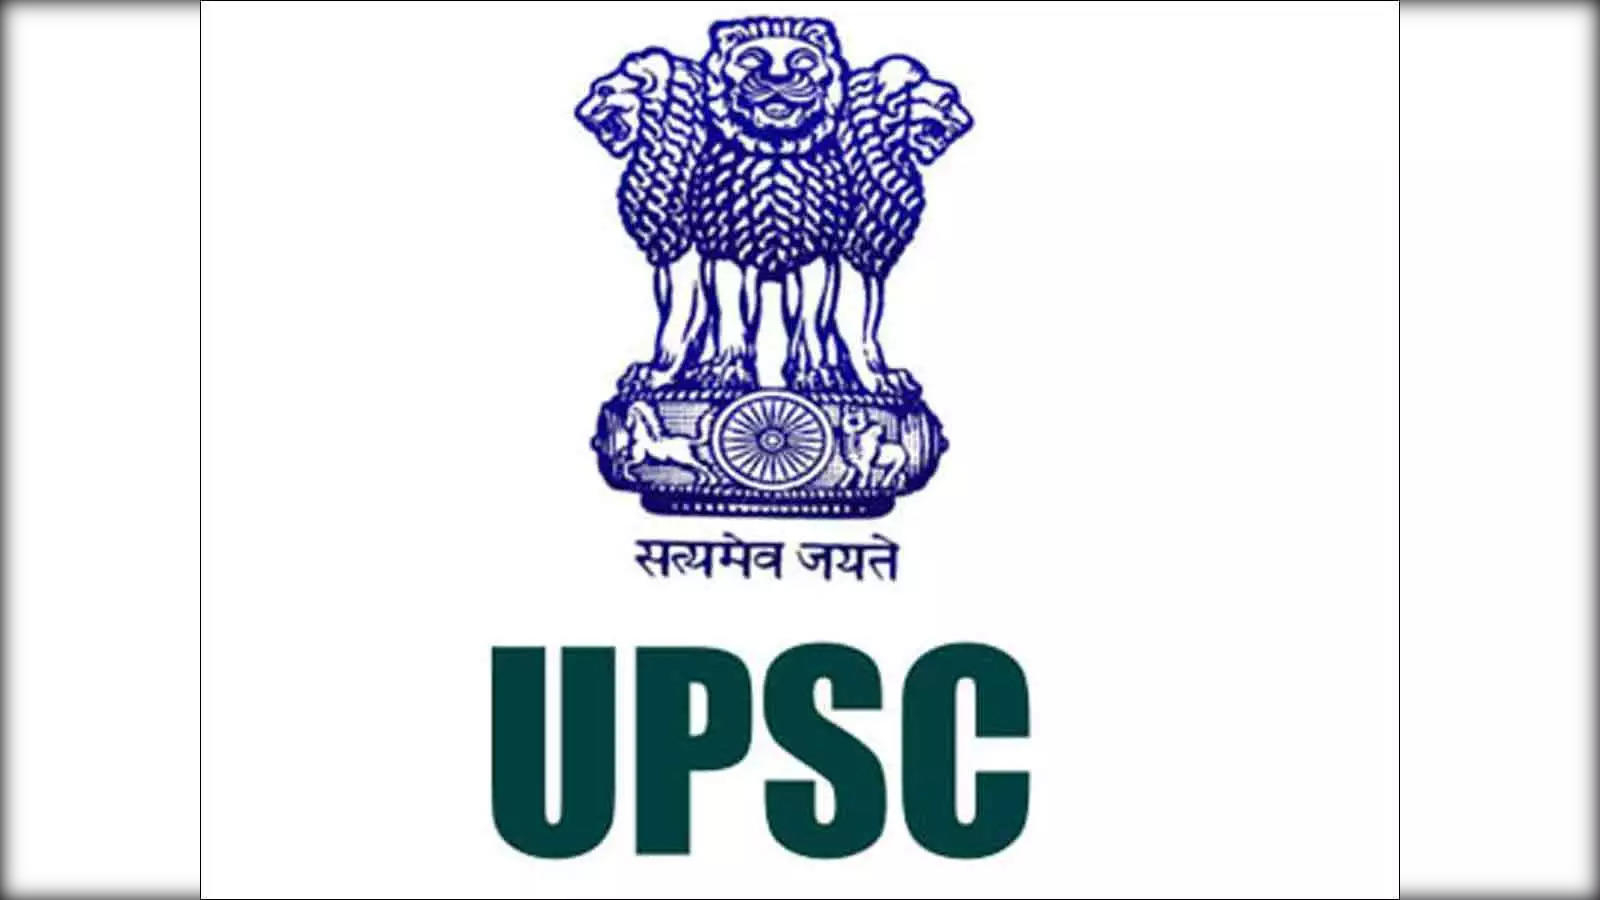 Best Online learning platform for UPSC IAS | KGS IAS | by Khan Global  Studies | Medium